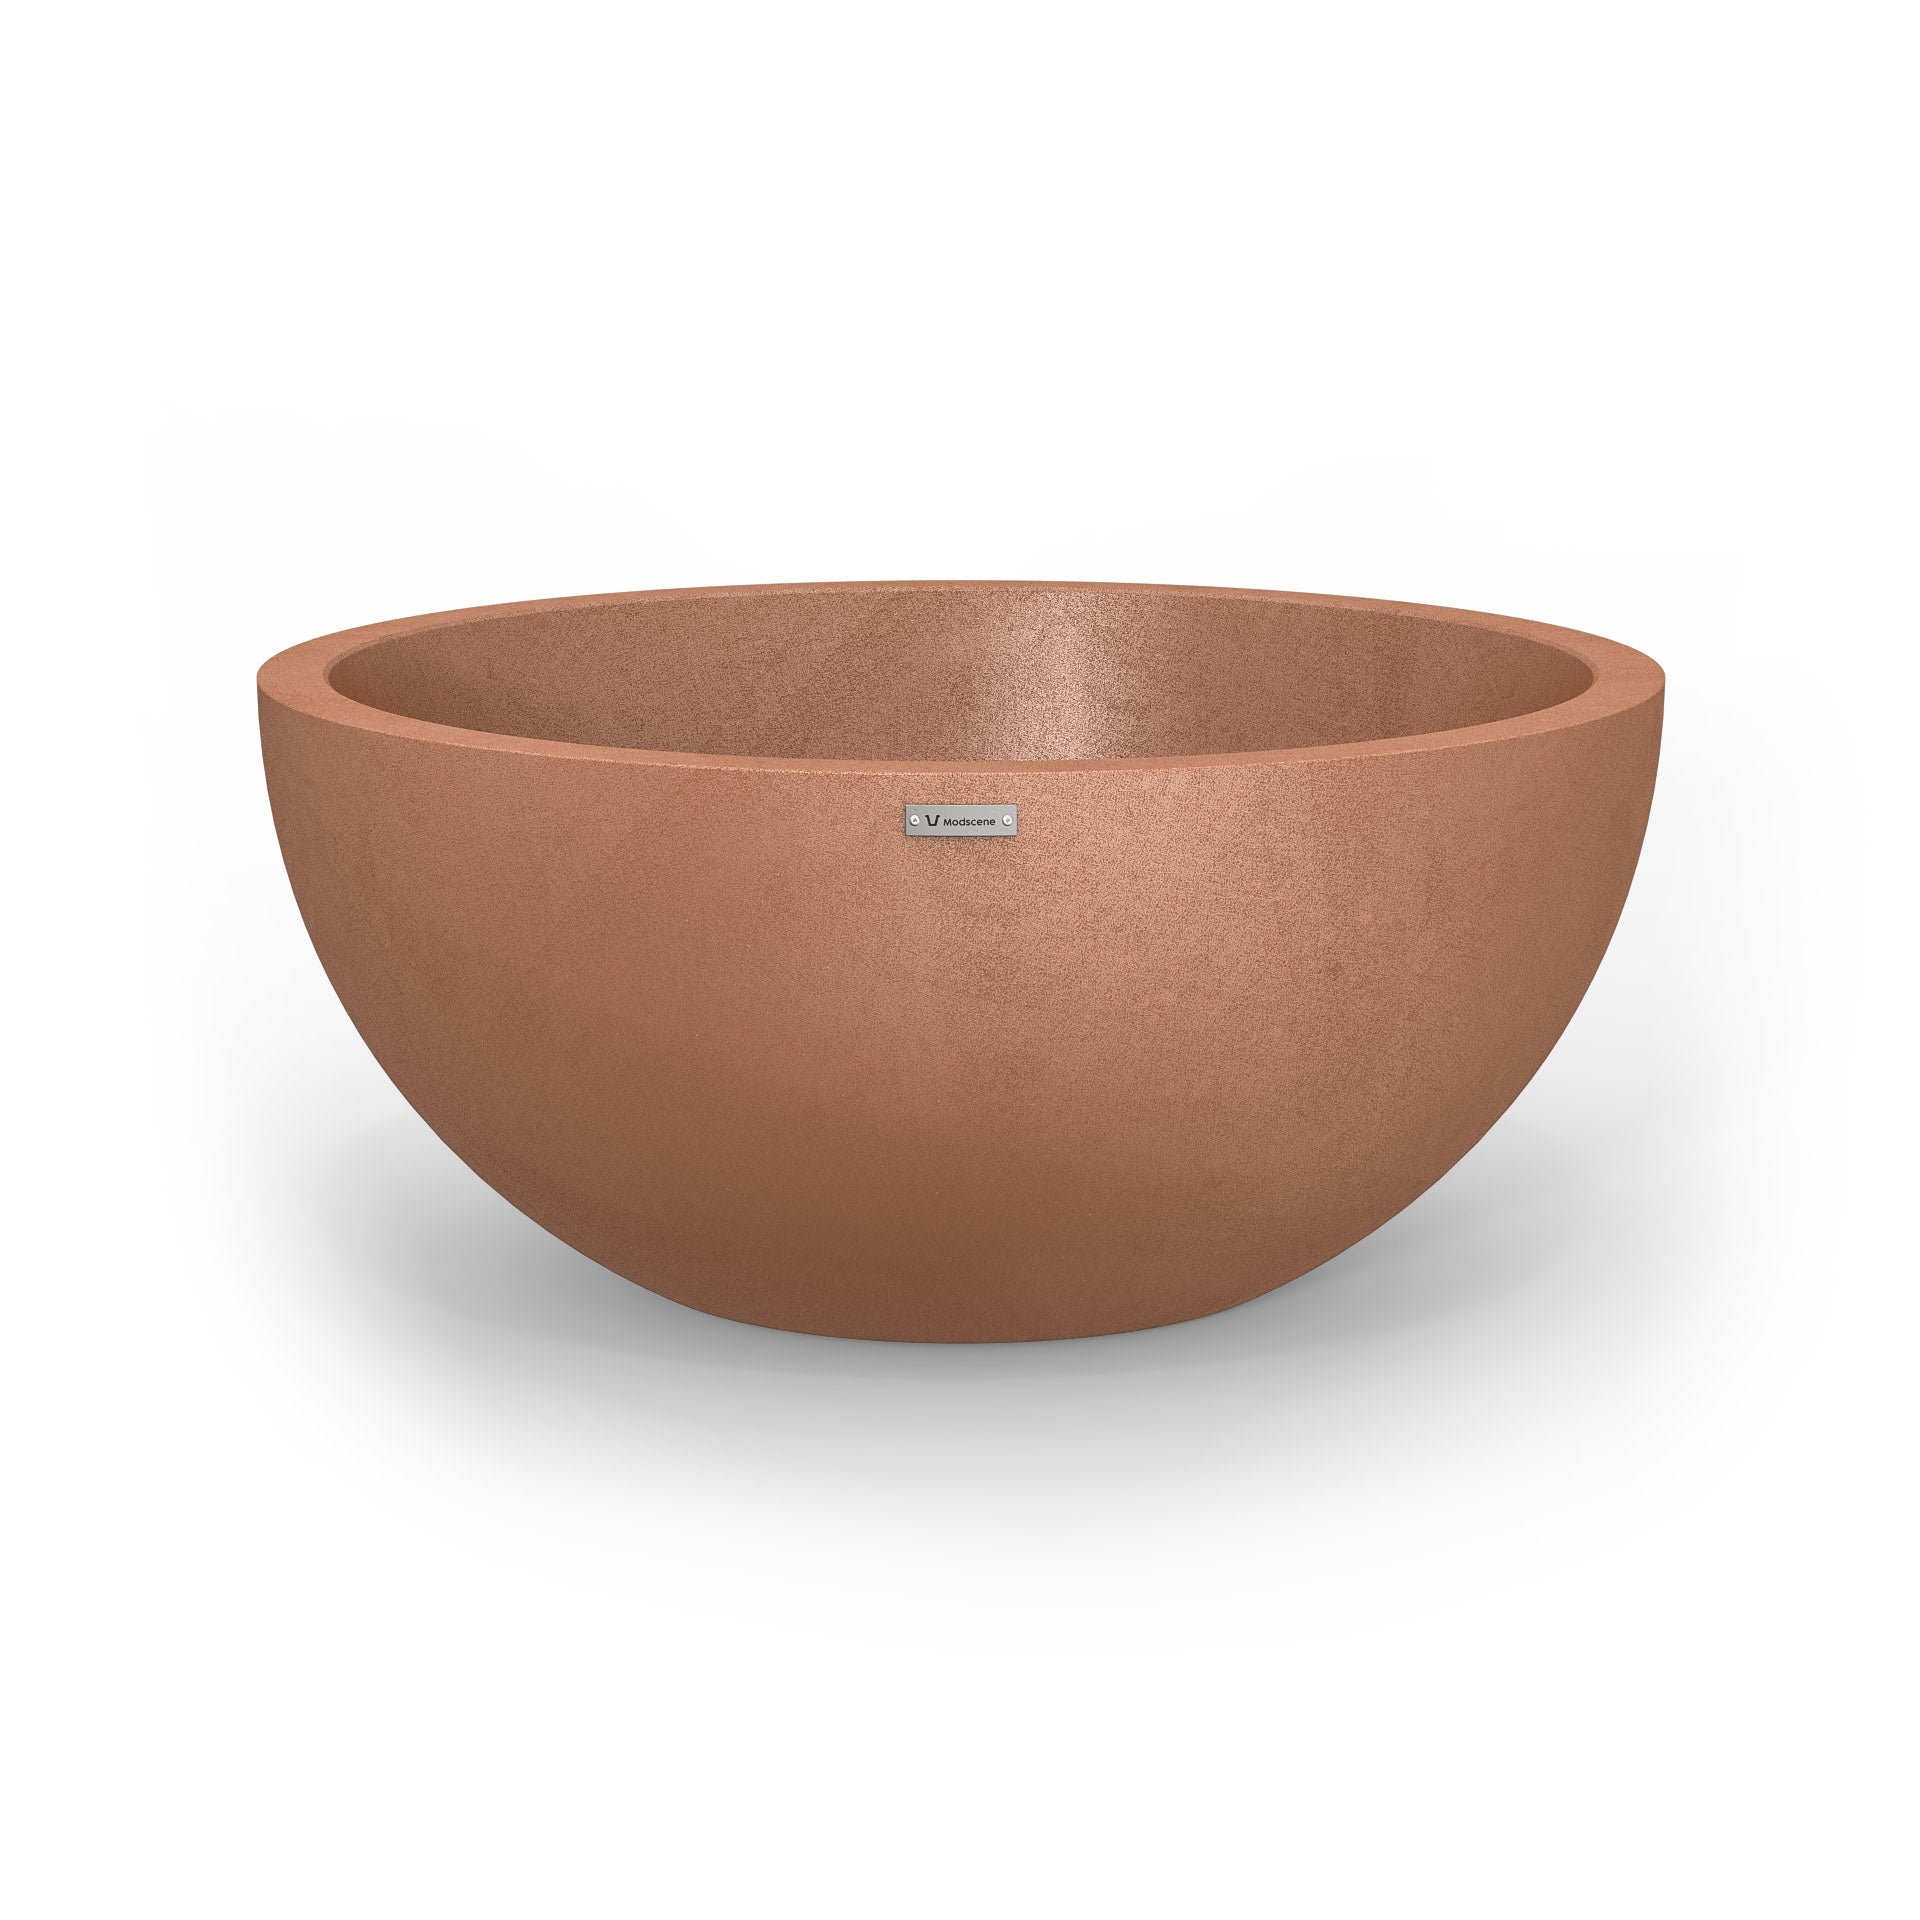 A large Modscene planter bowl in a rustic terracotta colour.